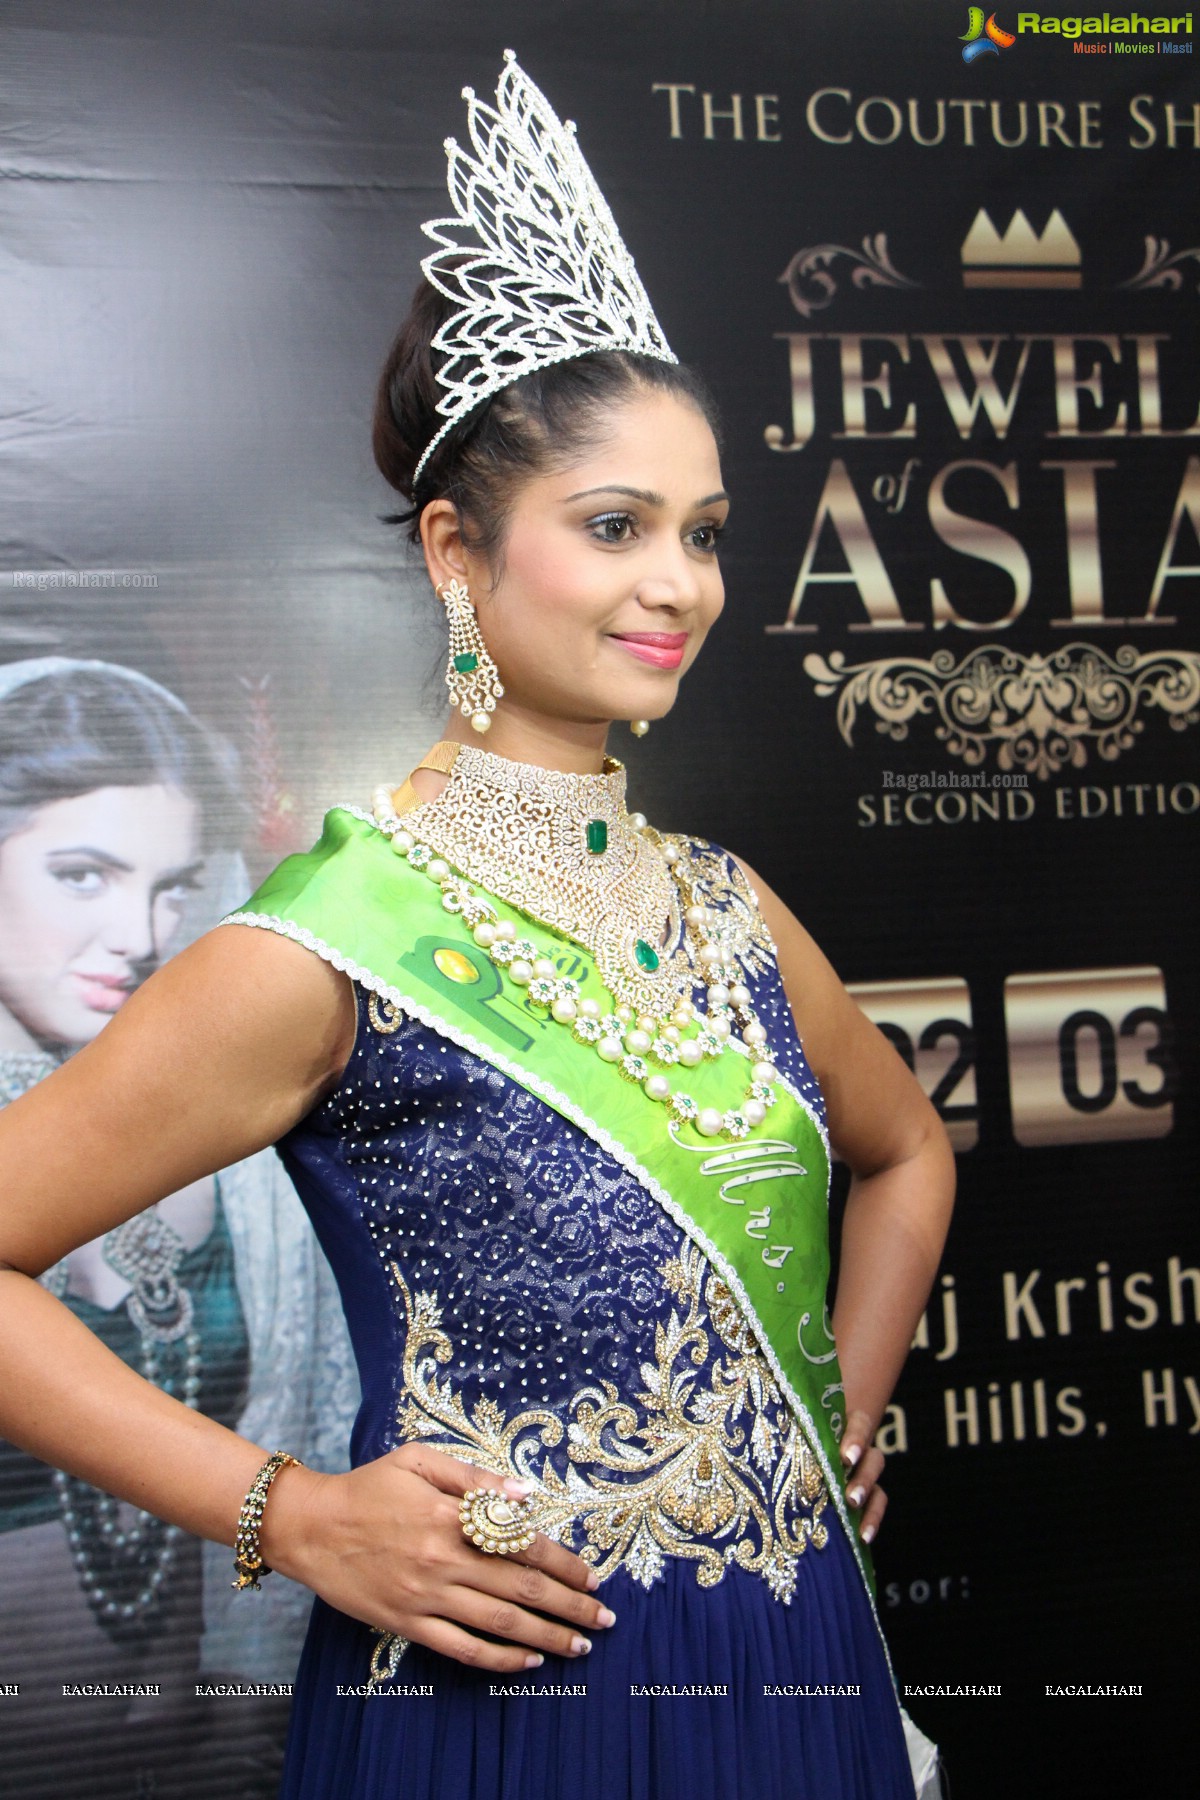 Jewels of Asia Curtain Raiser 2014